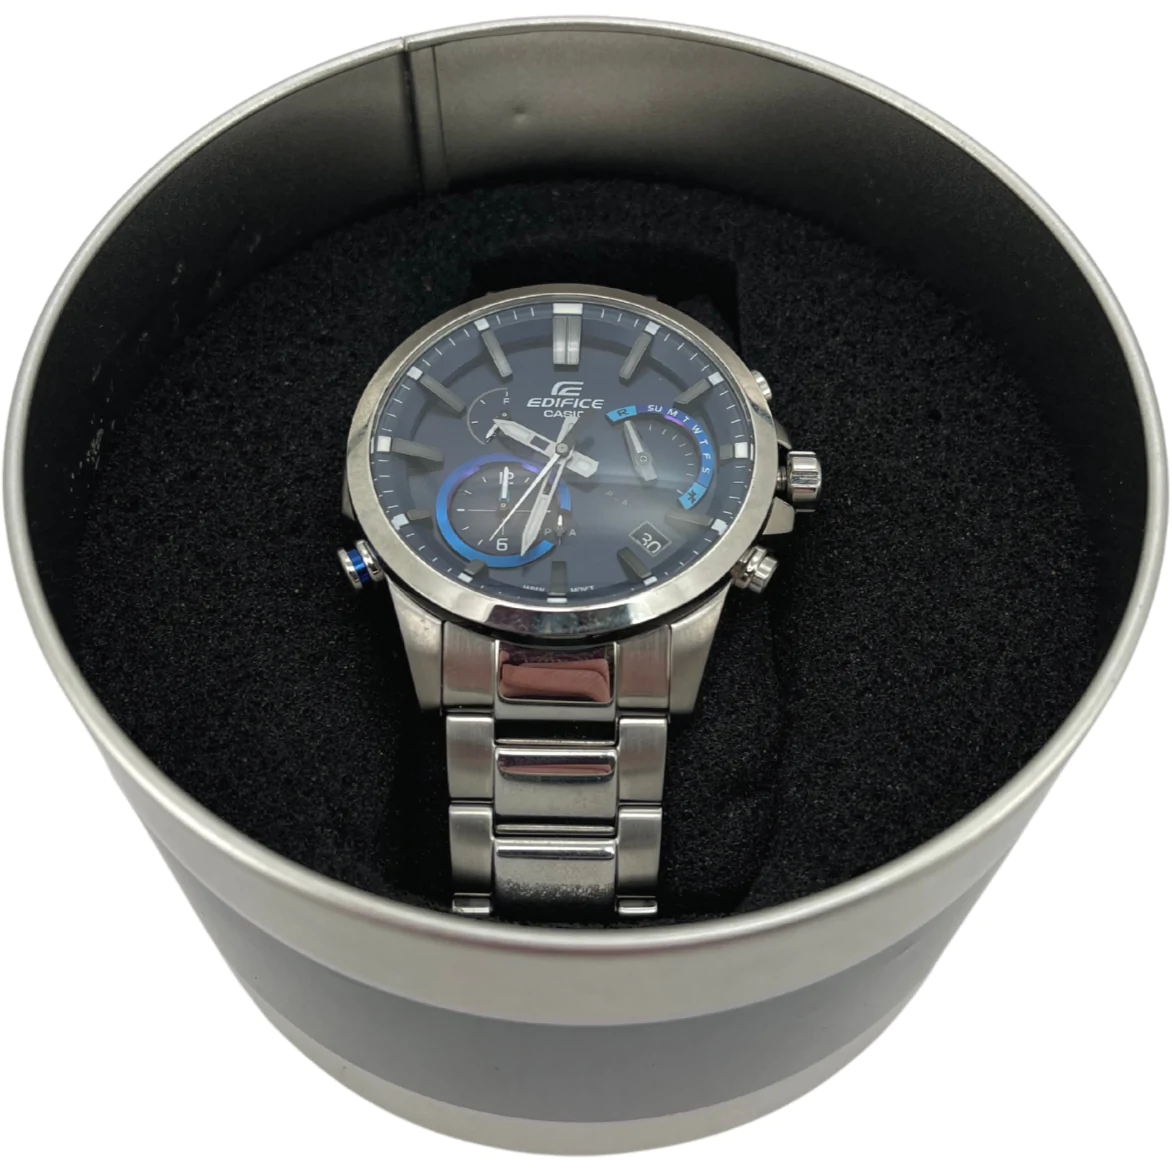 Casio Men's Wrist Watch / Edifice EQB-700-2A / Silver & Blue / Bluetooth Watch / Analog Display **DEALS**